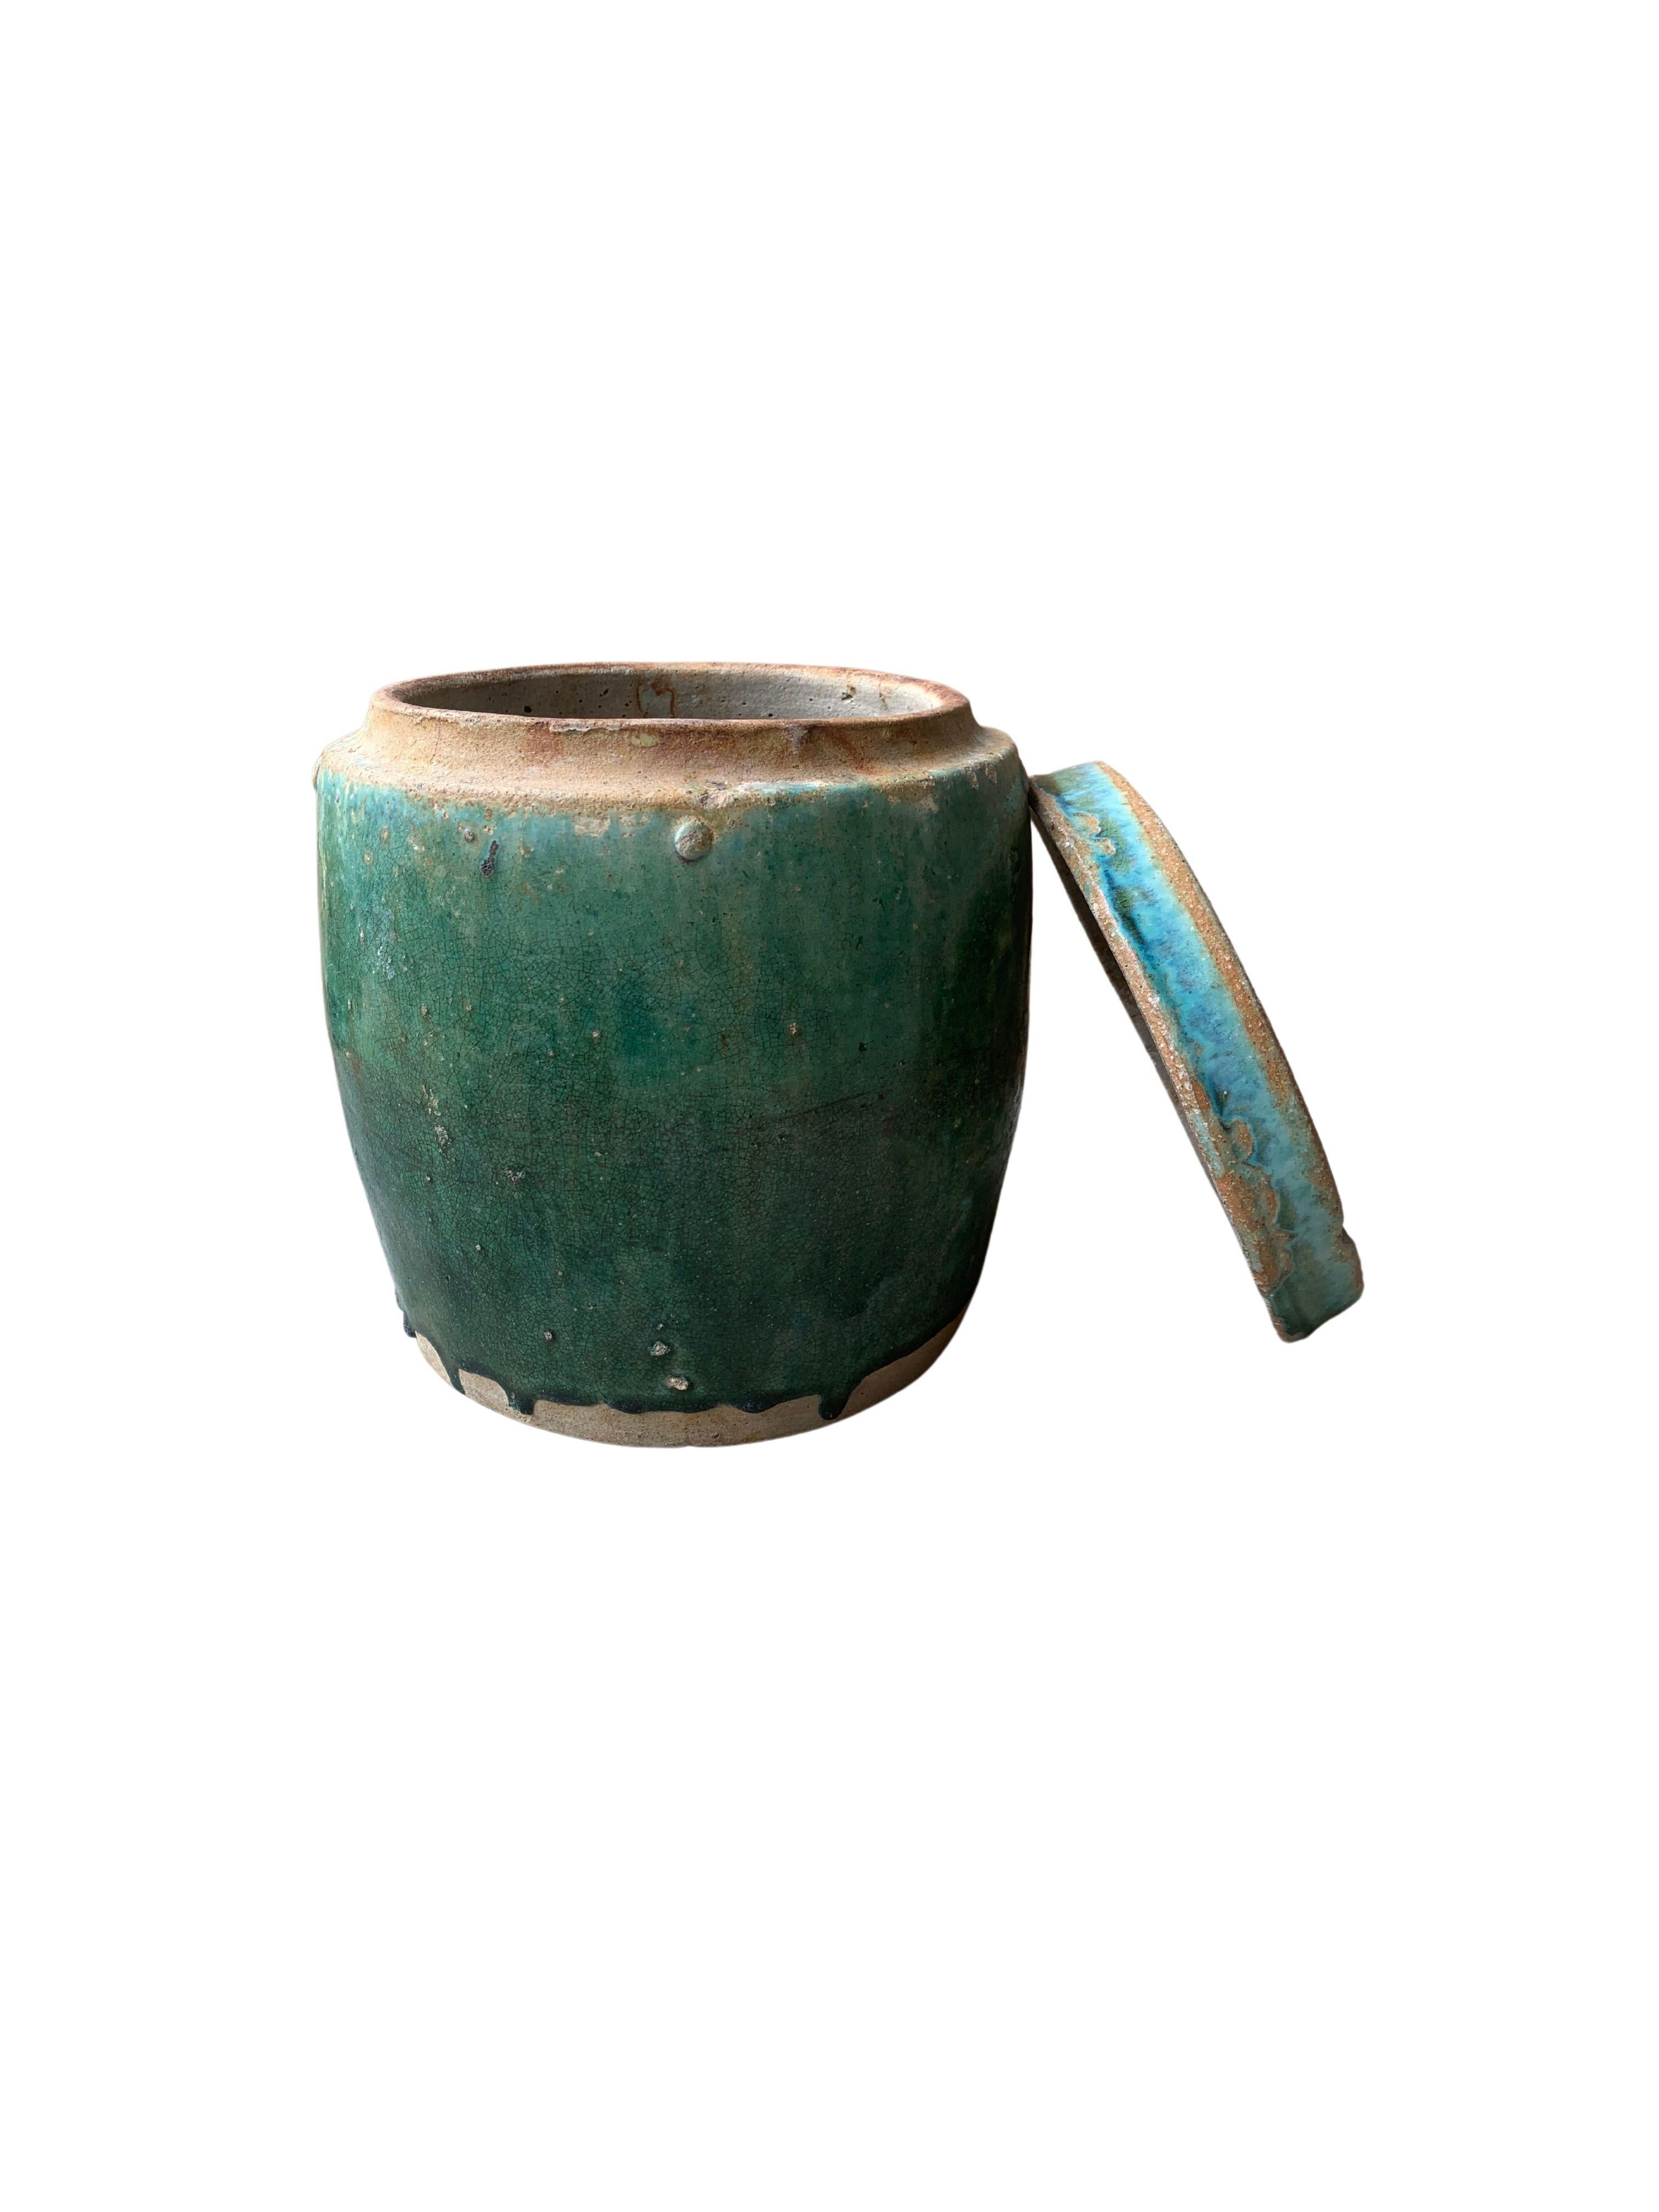 Chinese Shiwan Green Glazed Ceramic Jar / Planter, c. 1900 In Good Condition For Sale In Jimbaran, Bali